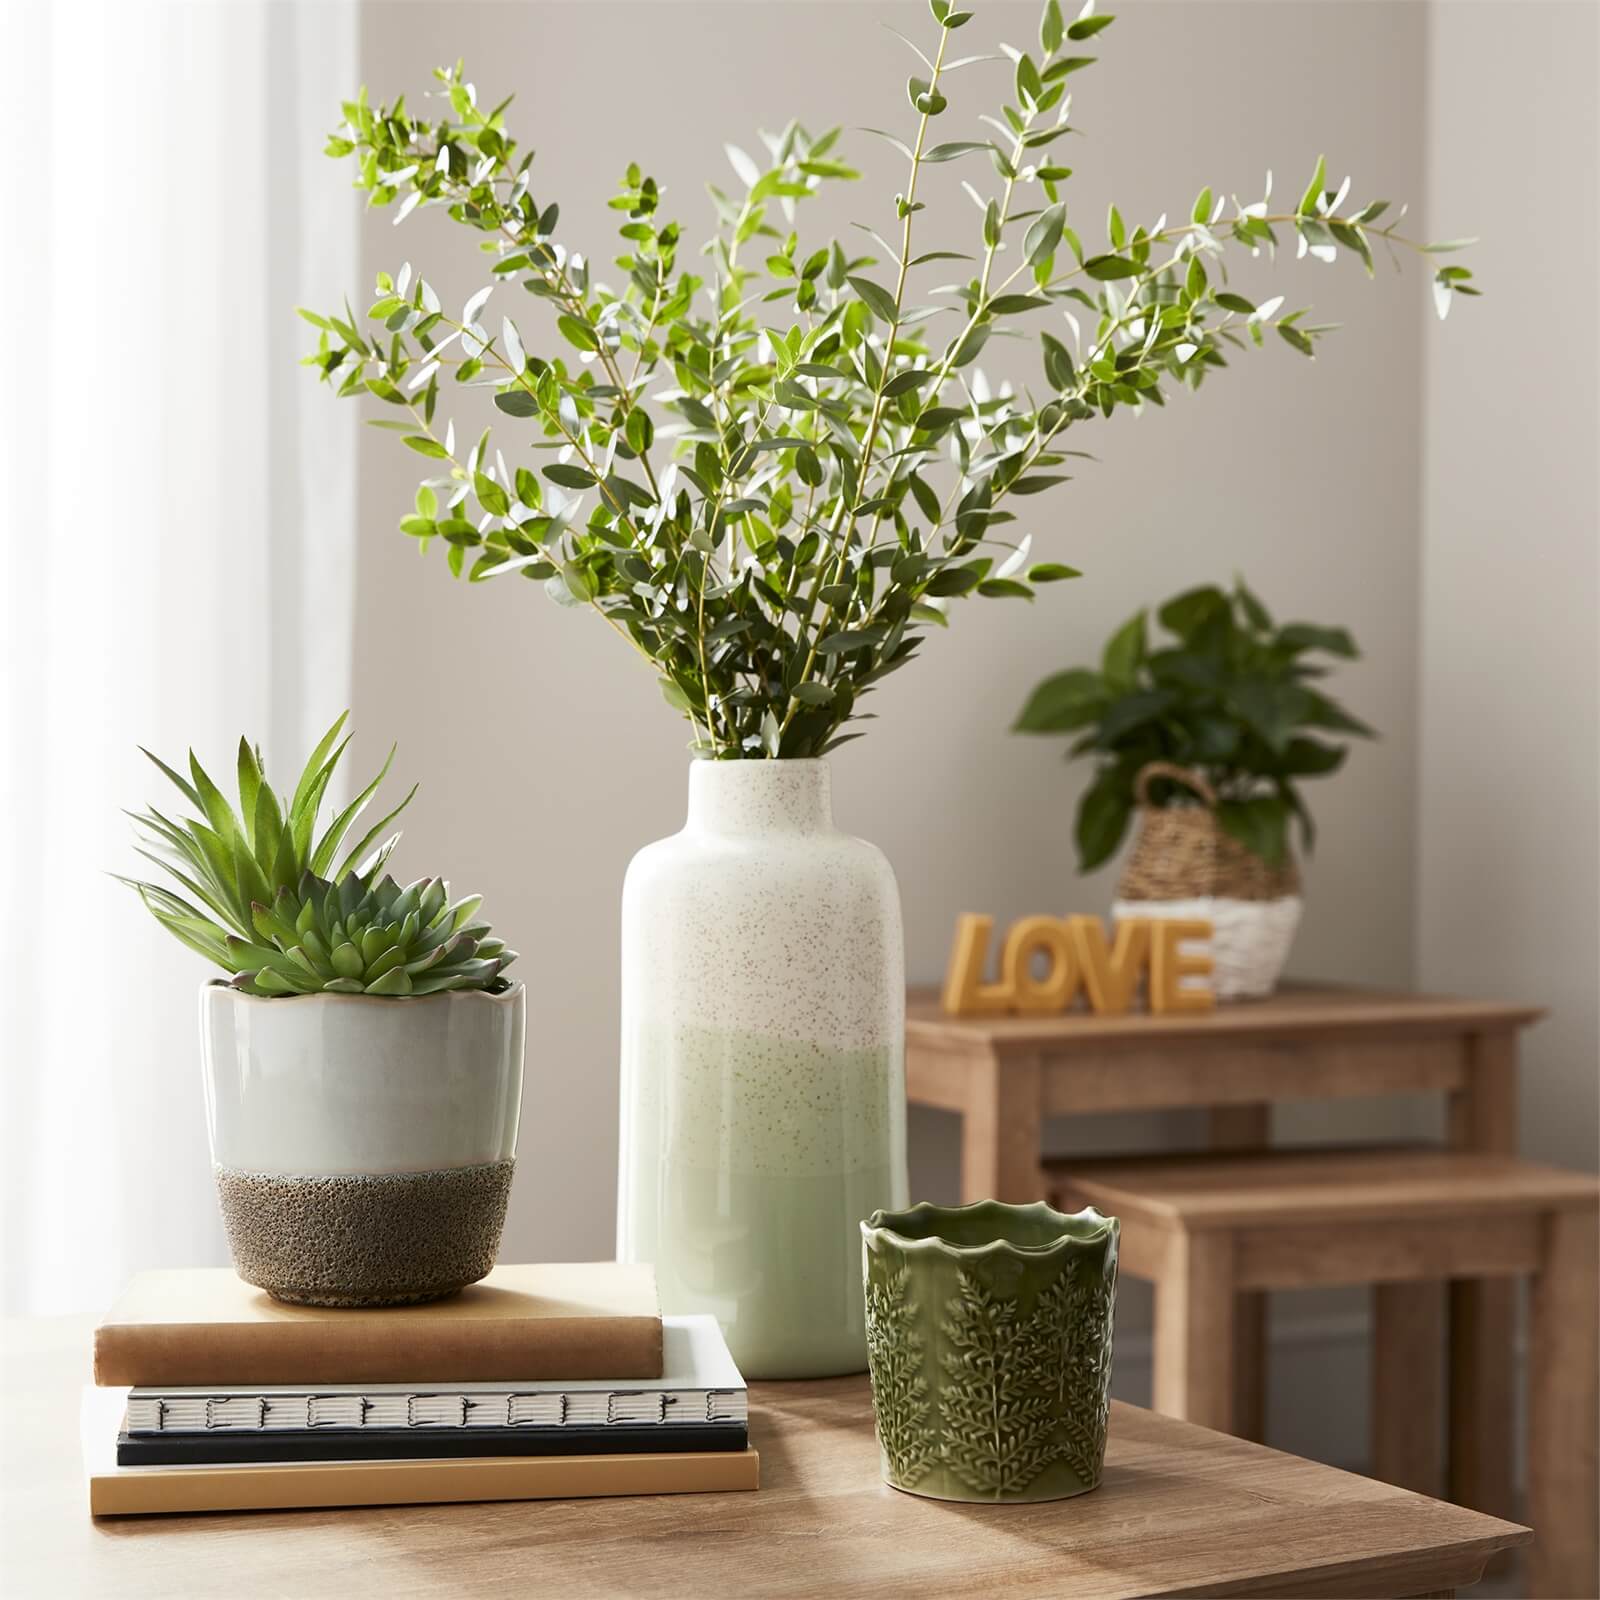 Ceramic Vase - Green & White